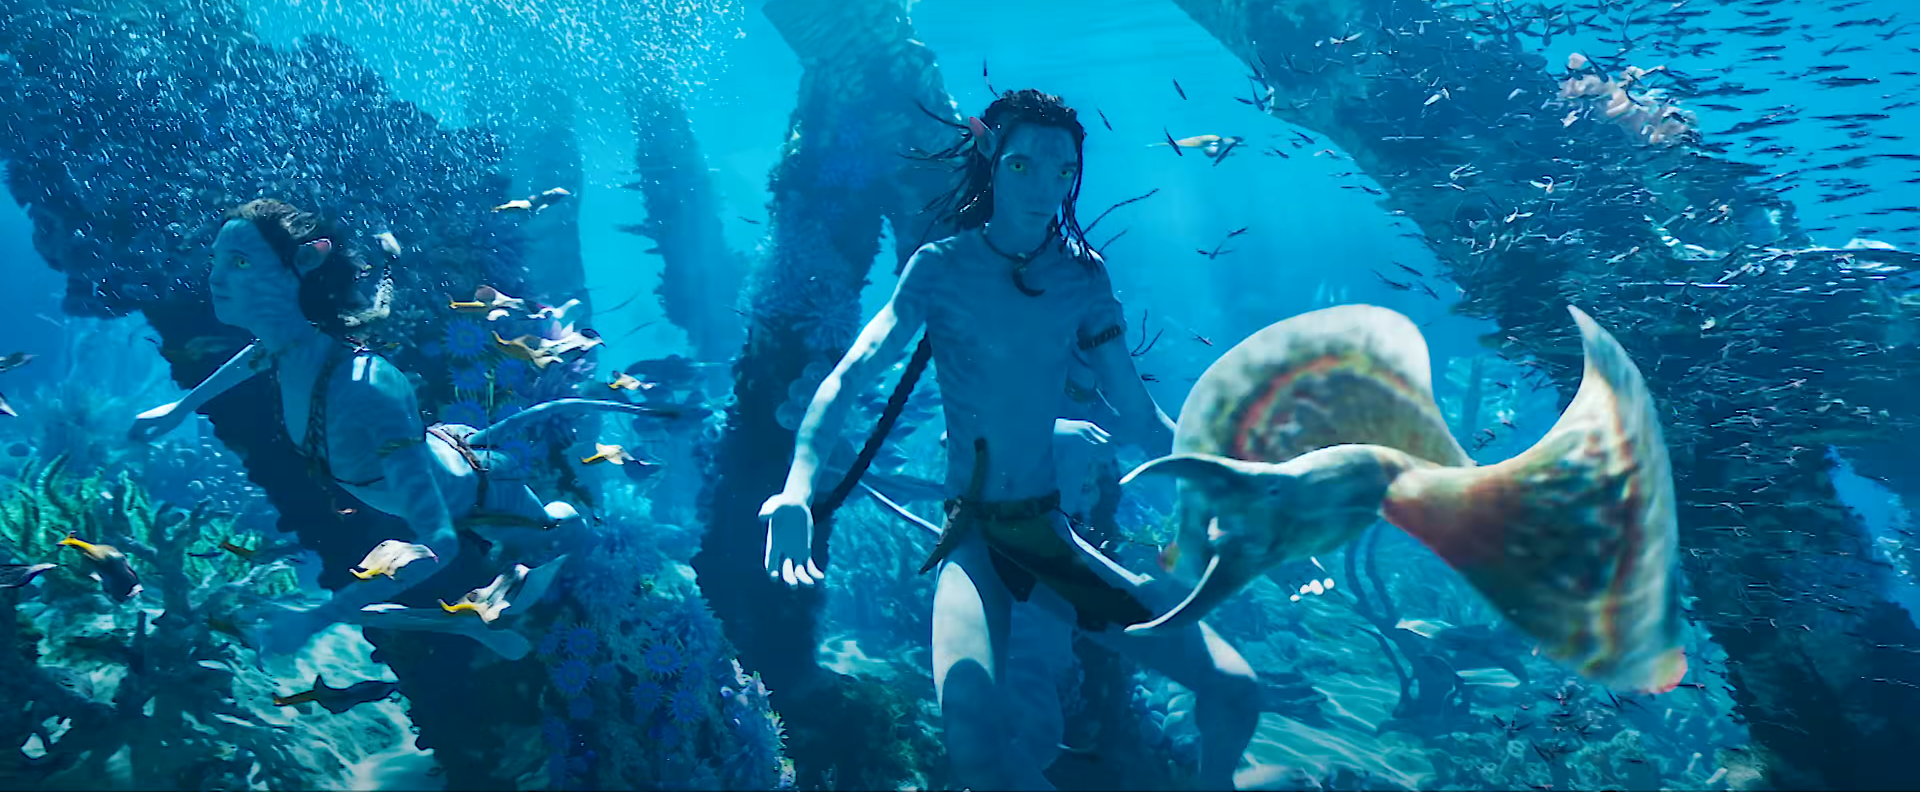 The Sully Children Explore Underwater